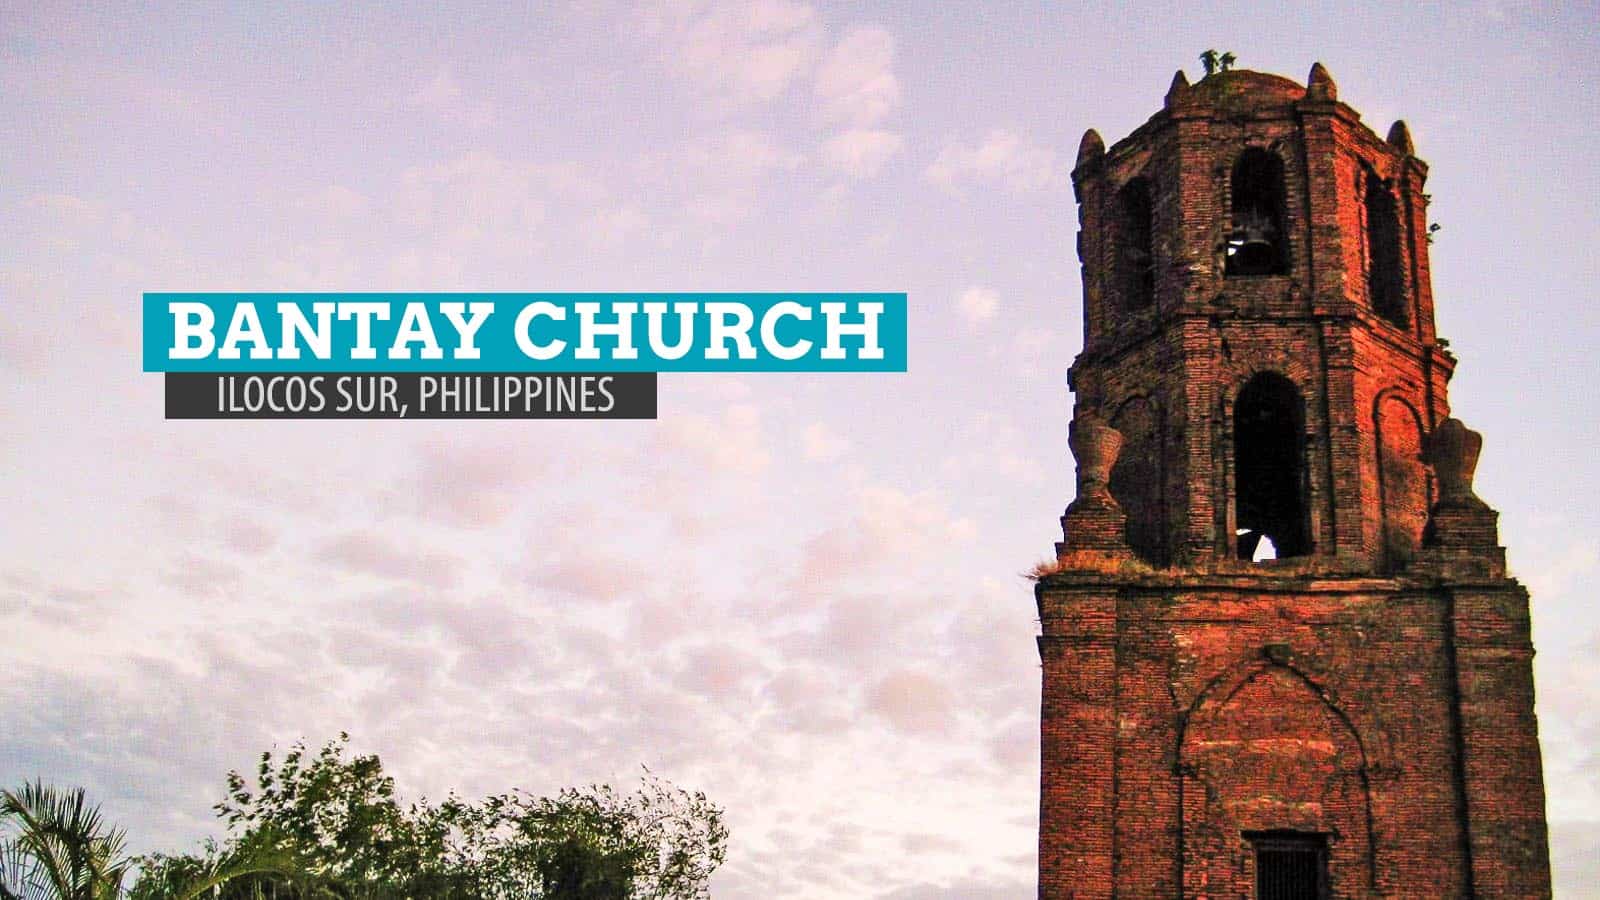 Bantay Church and Belfry: Ilocos Sur, Philippines